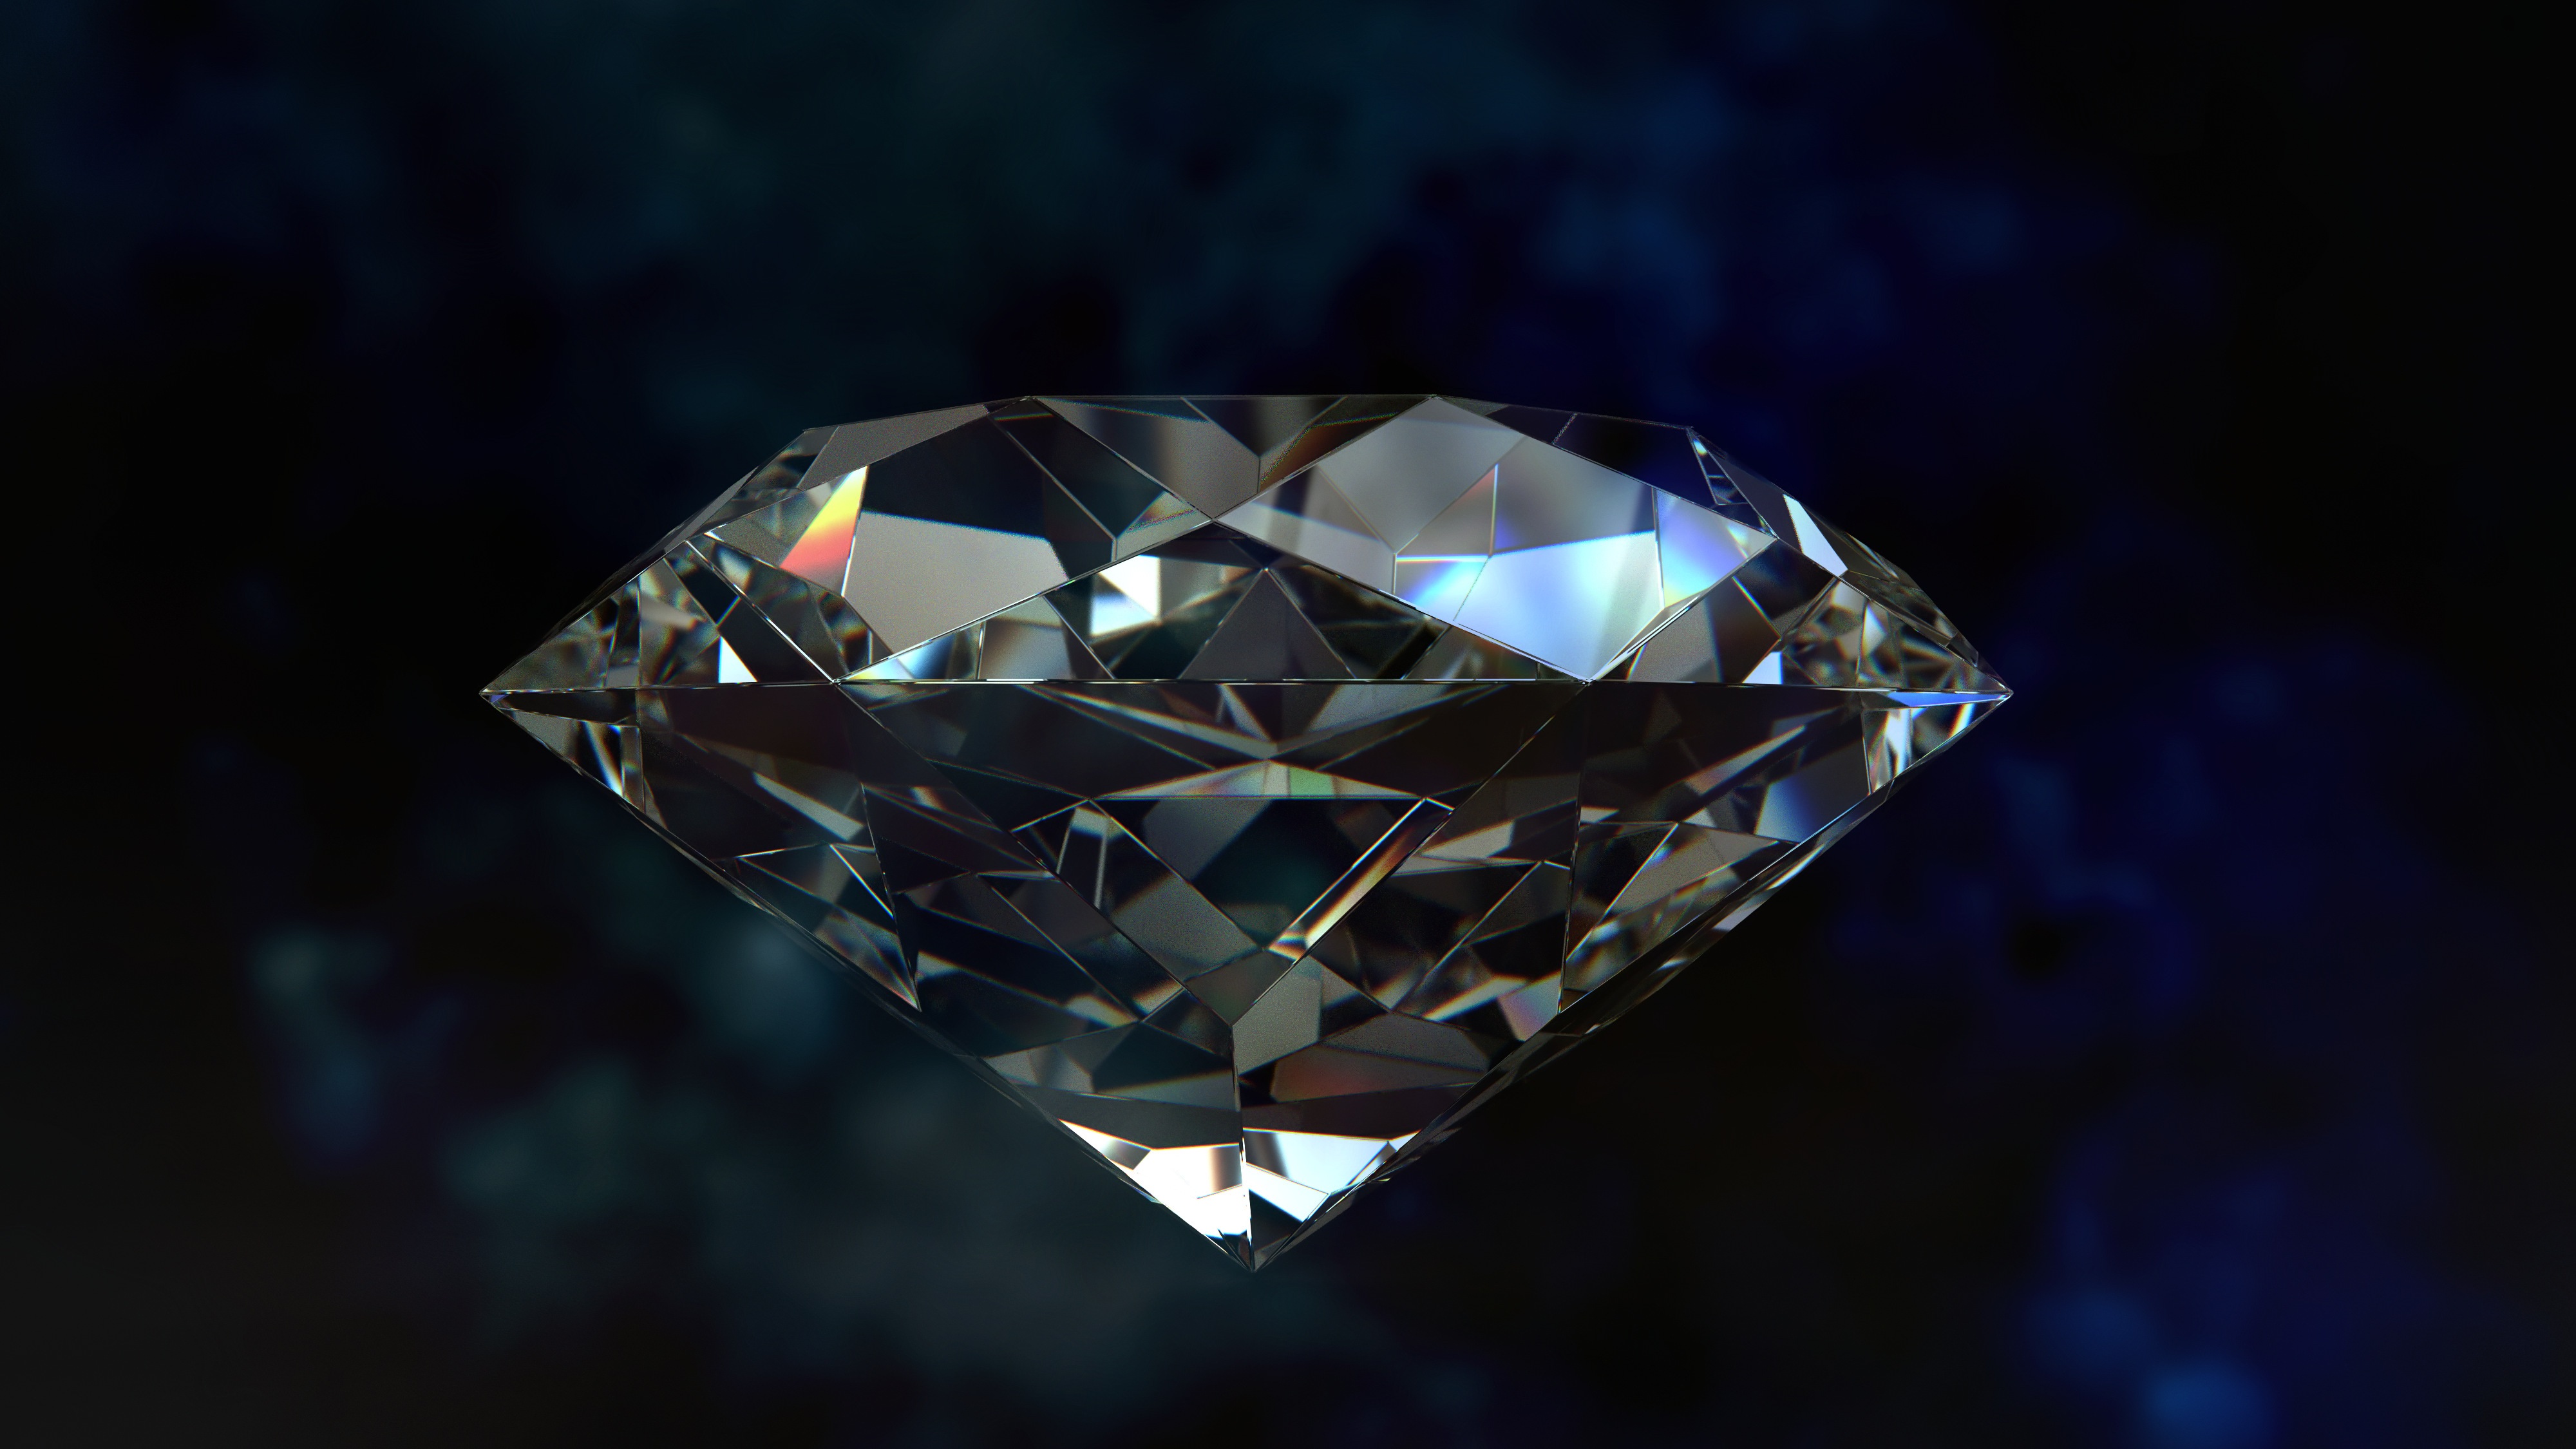 Karrisa Diamond